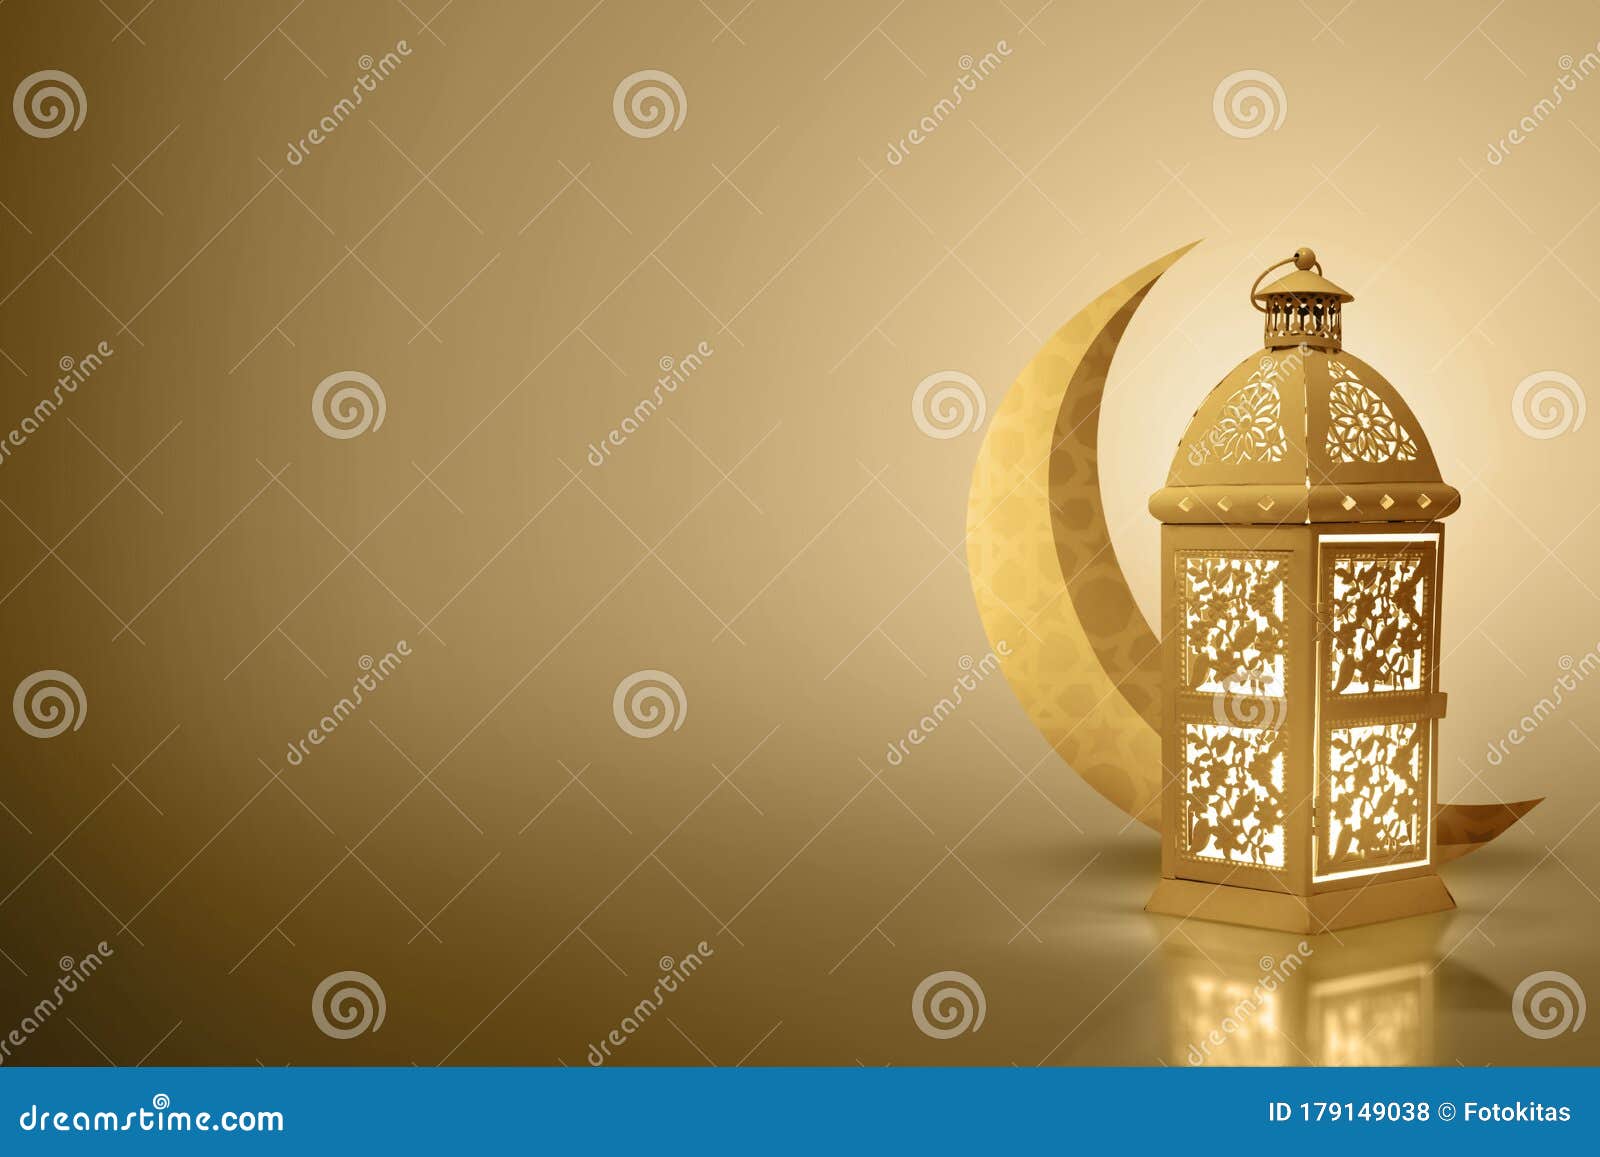 arabic lantern, ramadan kareem backgrounds